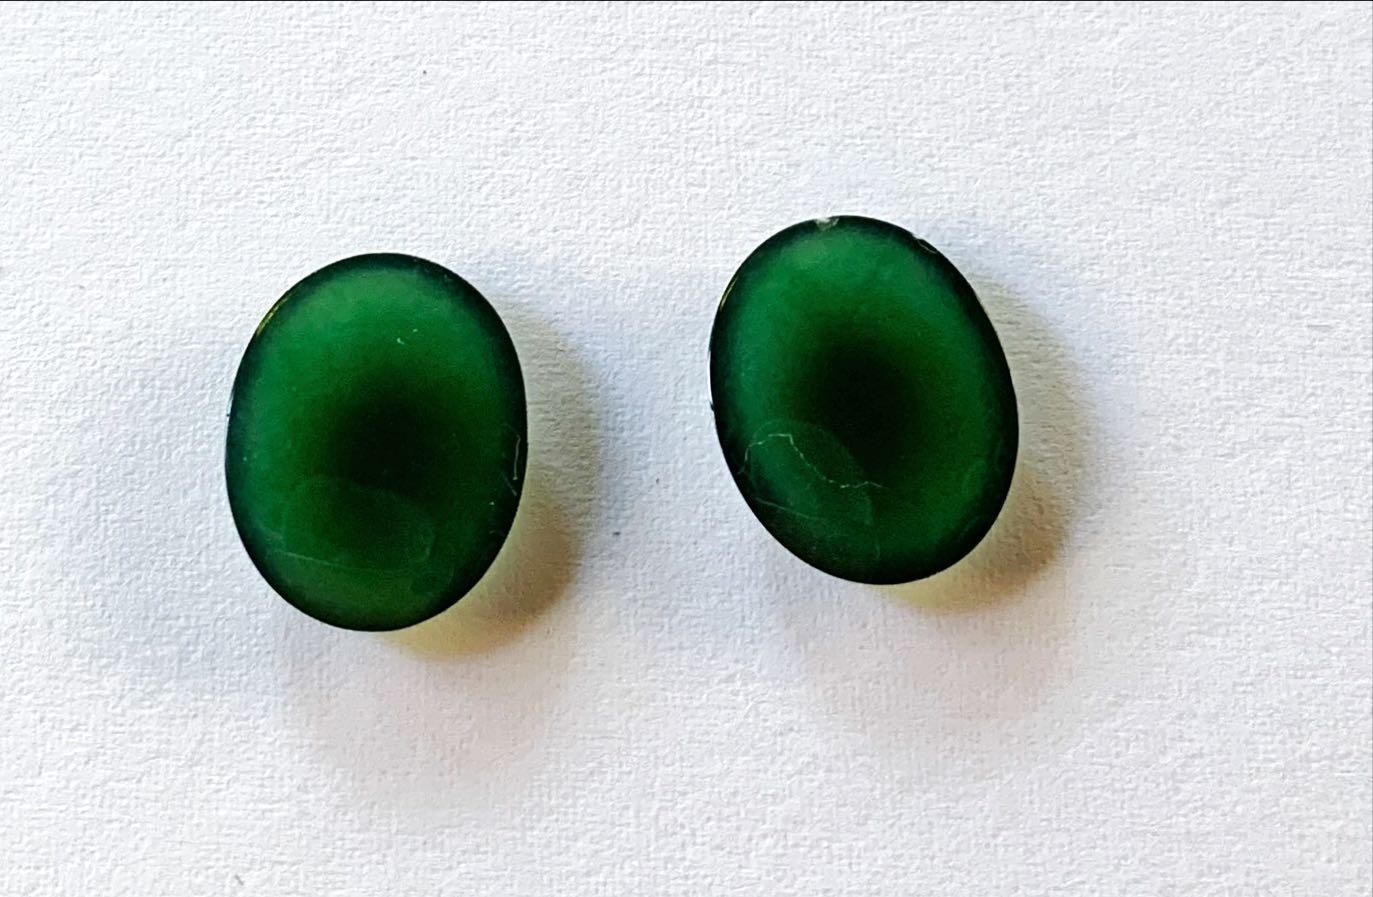 Uncut Green Rokan Myanmar Jadeite Loose Stones 2pcs 4.3/4.6 ct Grade A #1 For Sale